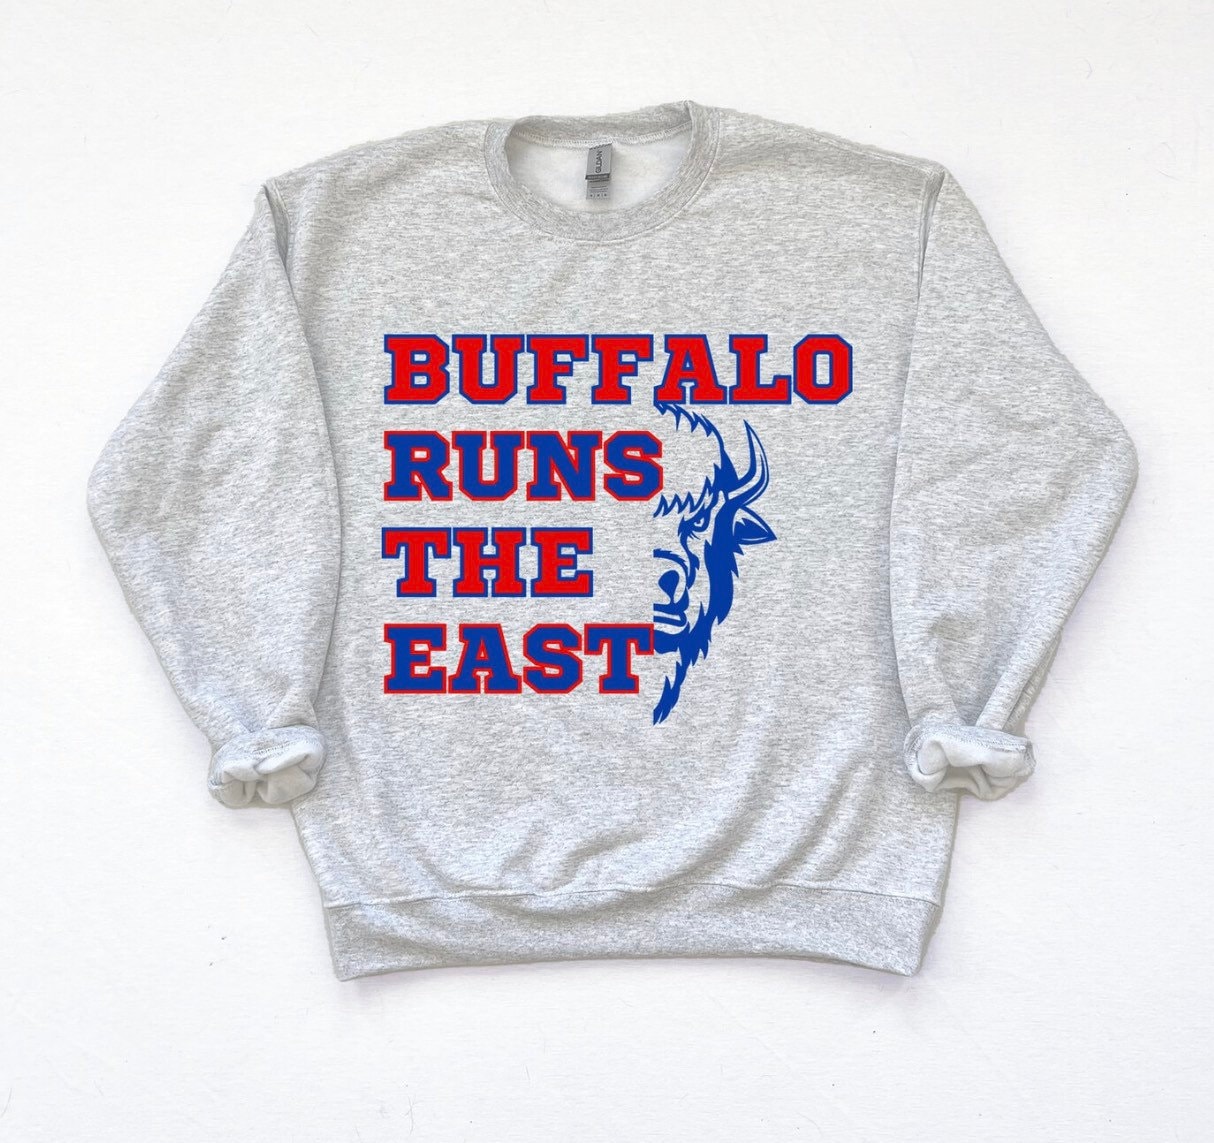 bills run the east sweatshirt